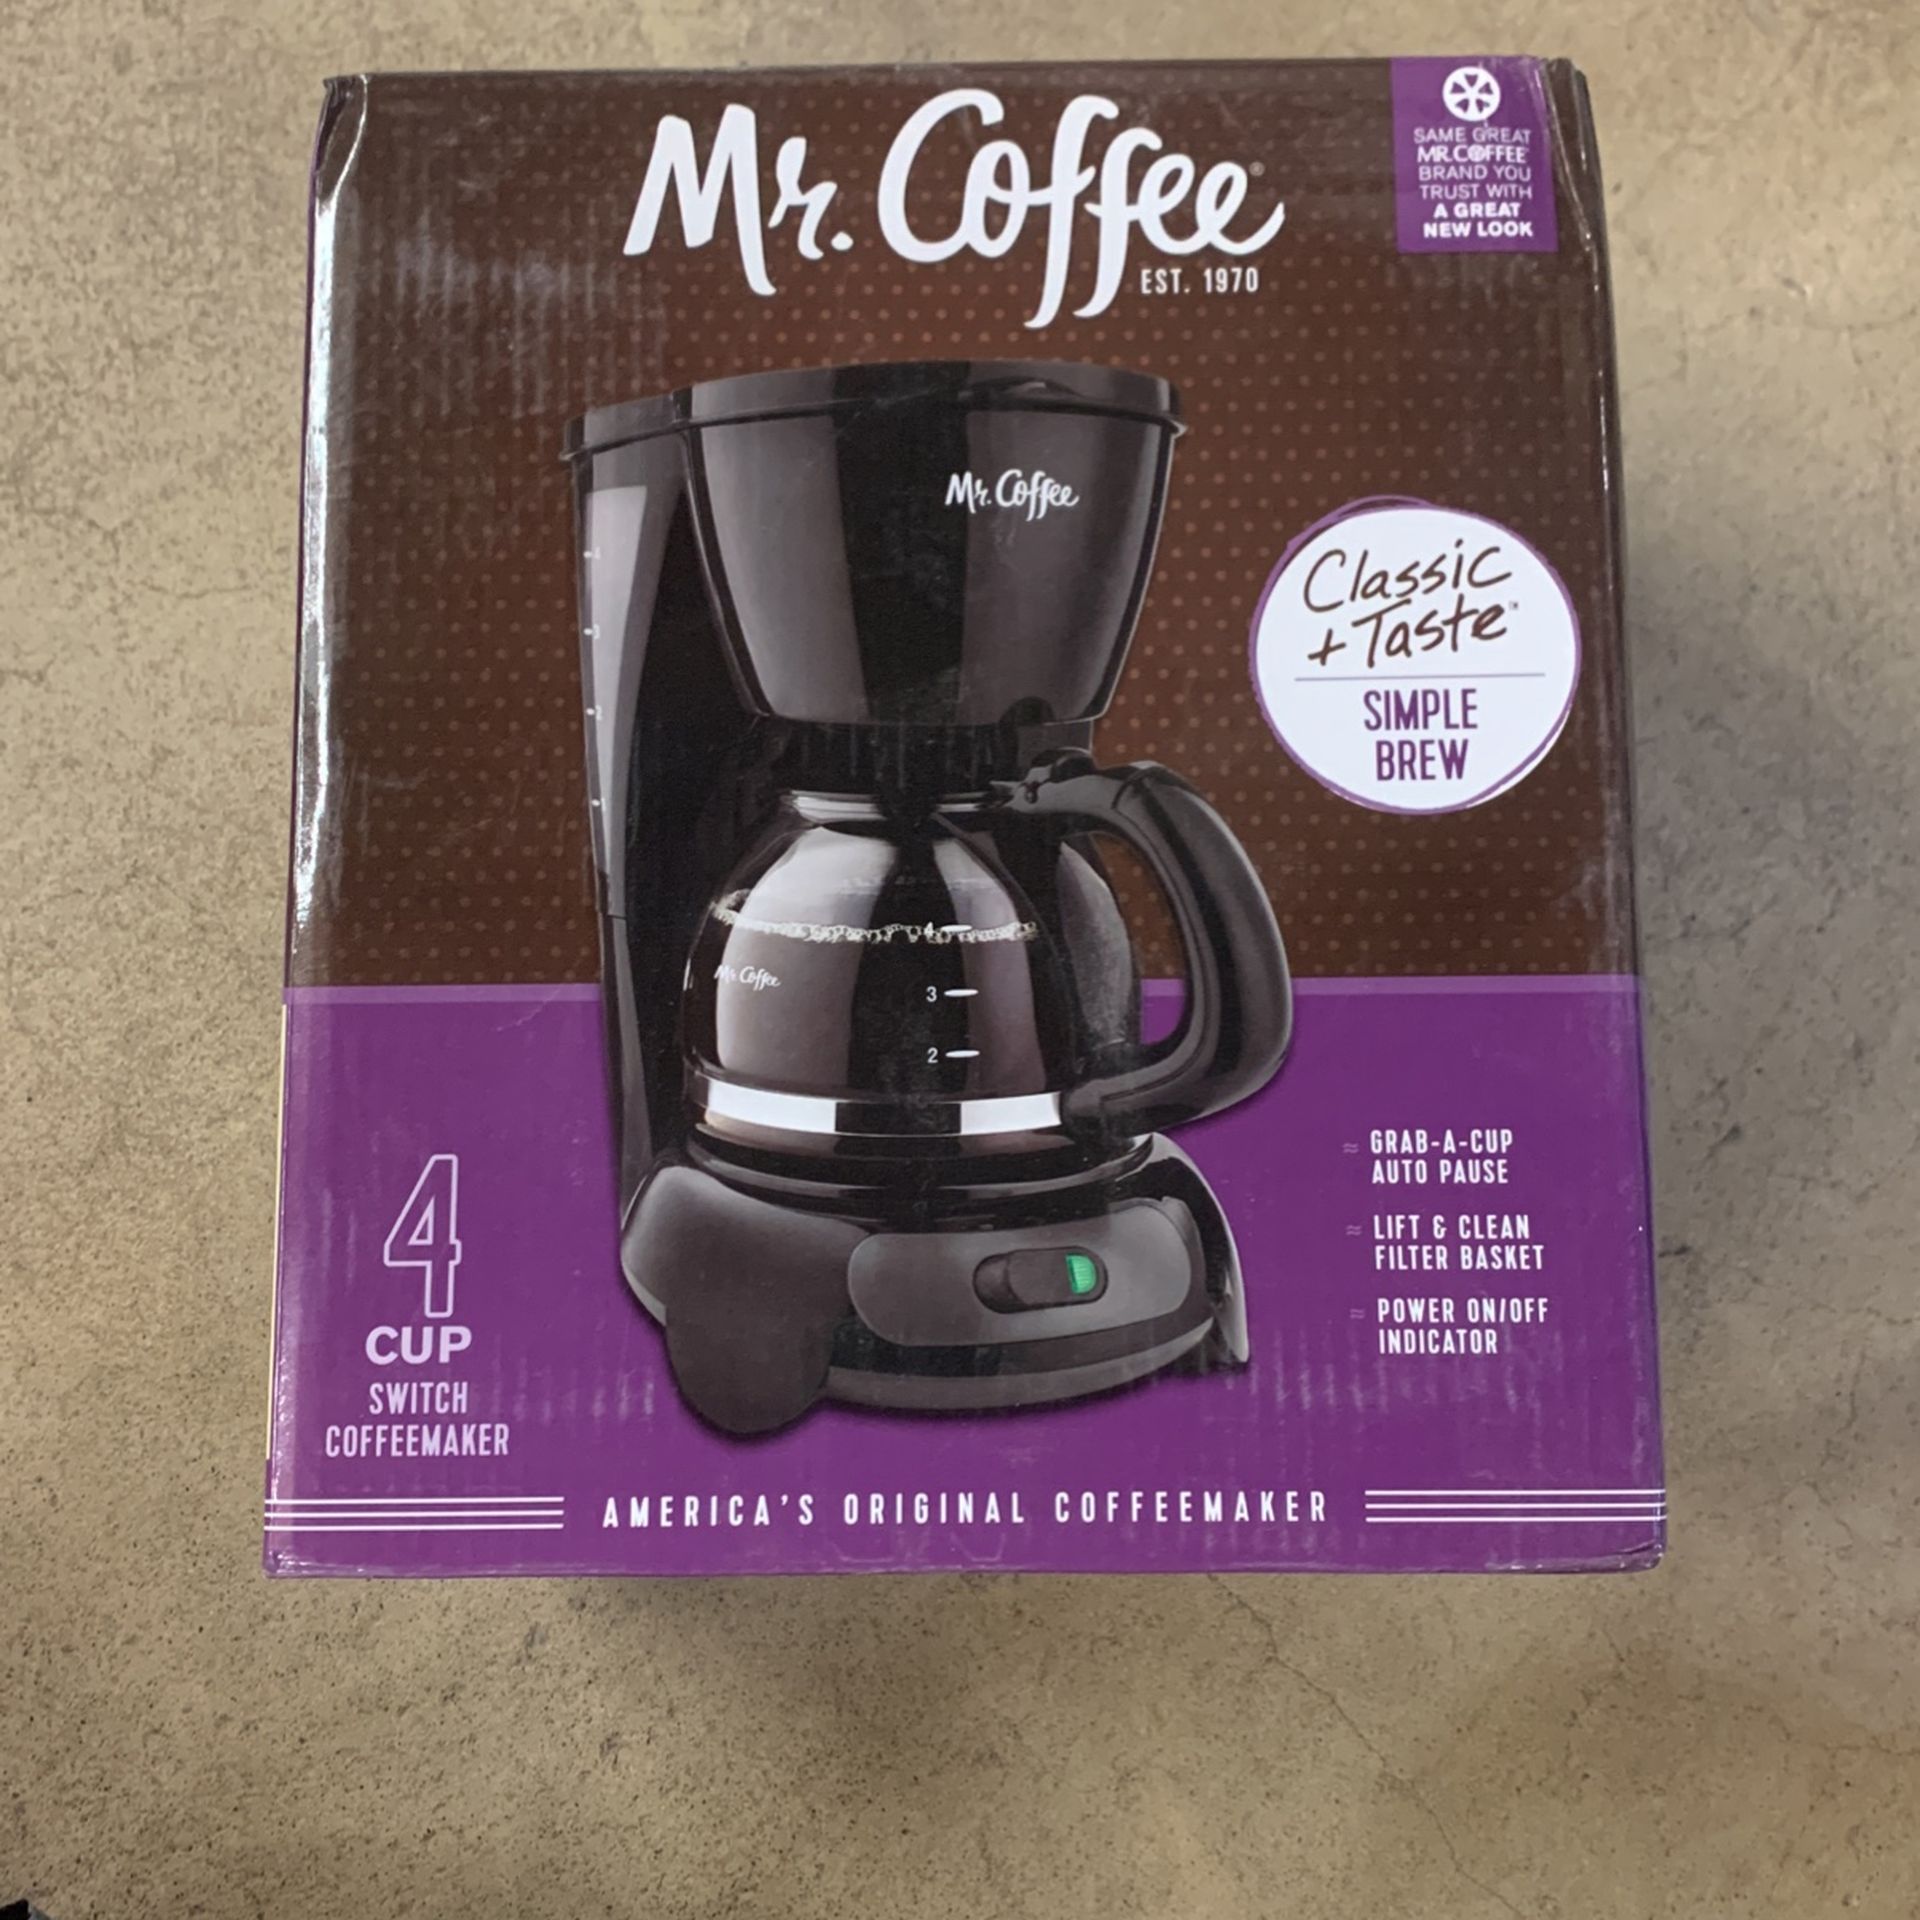 Mr Coffee Classic + Taste Coffeemaker, Switch, 4 Cup